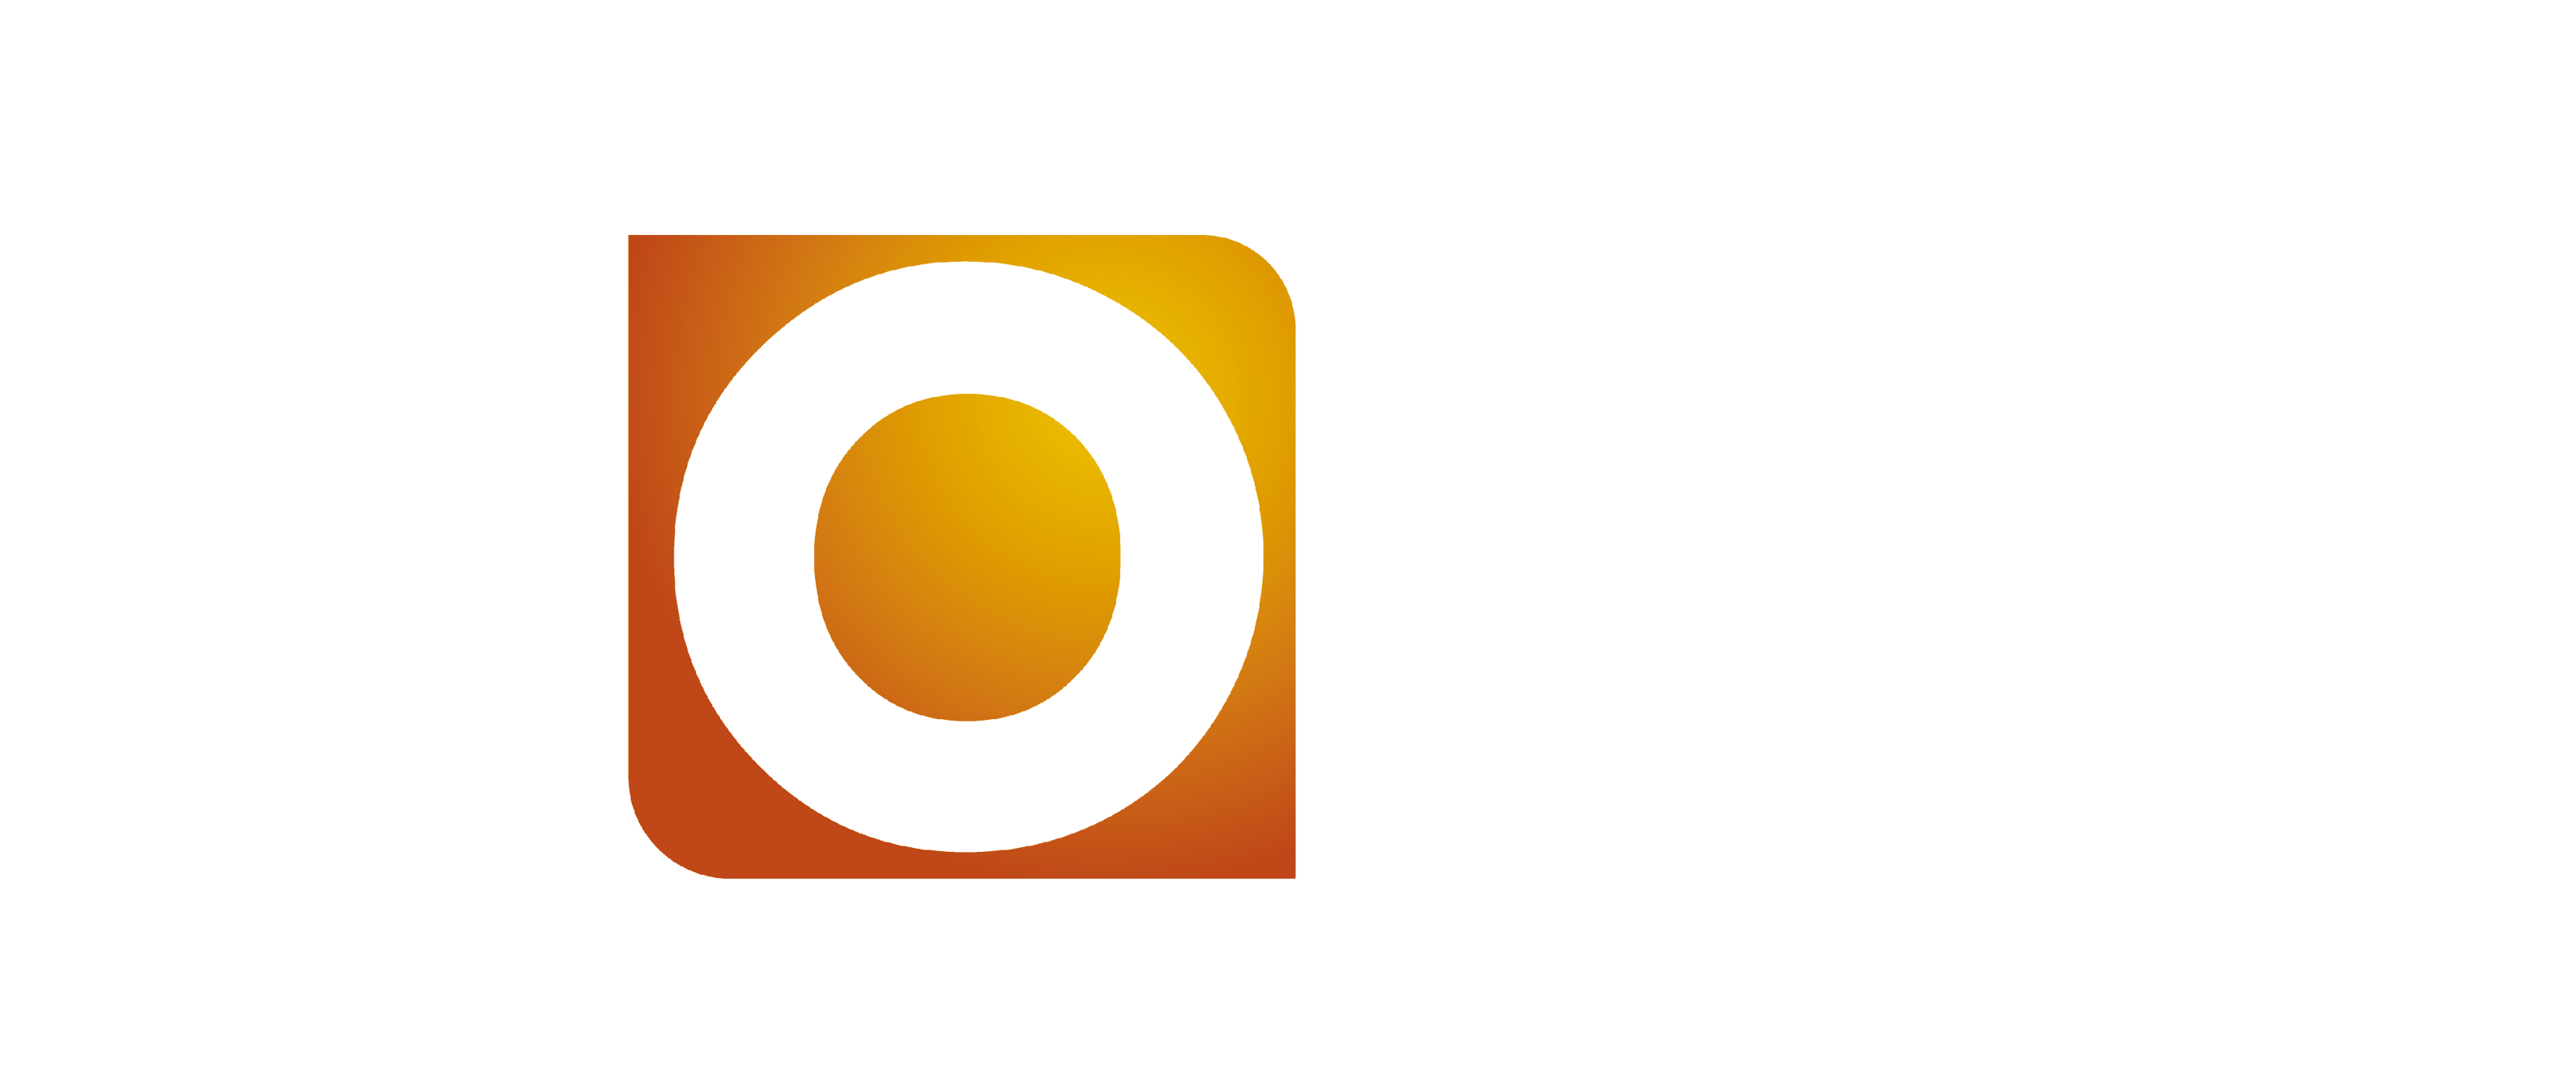 eosol logo